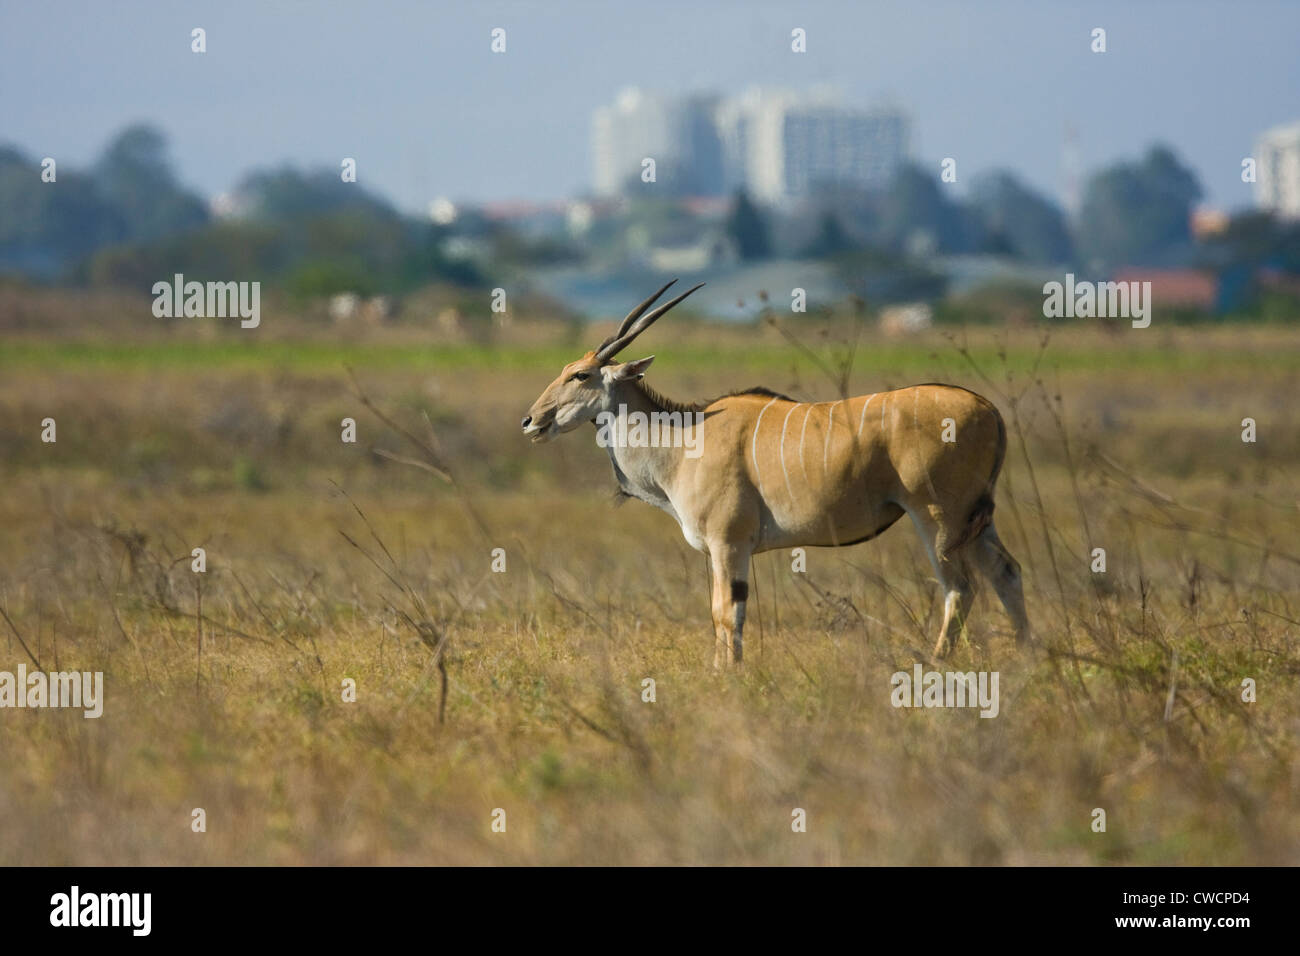 ELAND (Taurotragus oryx) with Nairobi city in background, Nairobi National Park, Kenya. Stock Photo